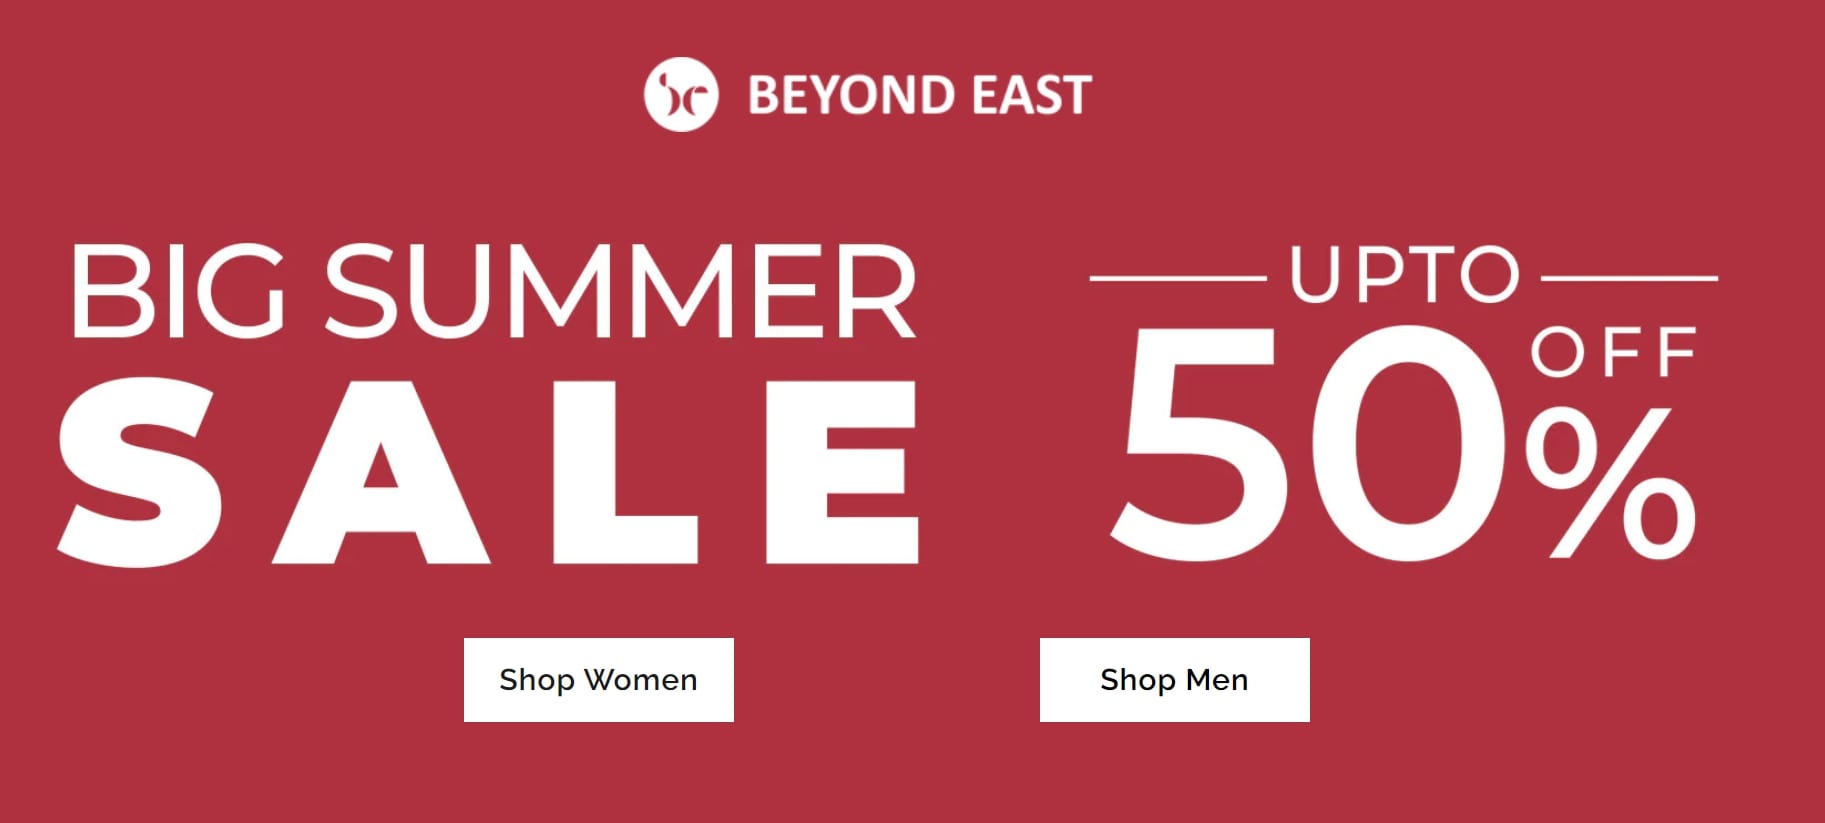 beyond east 50 sale summer